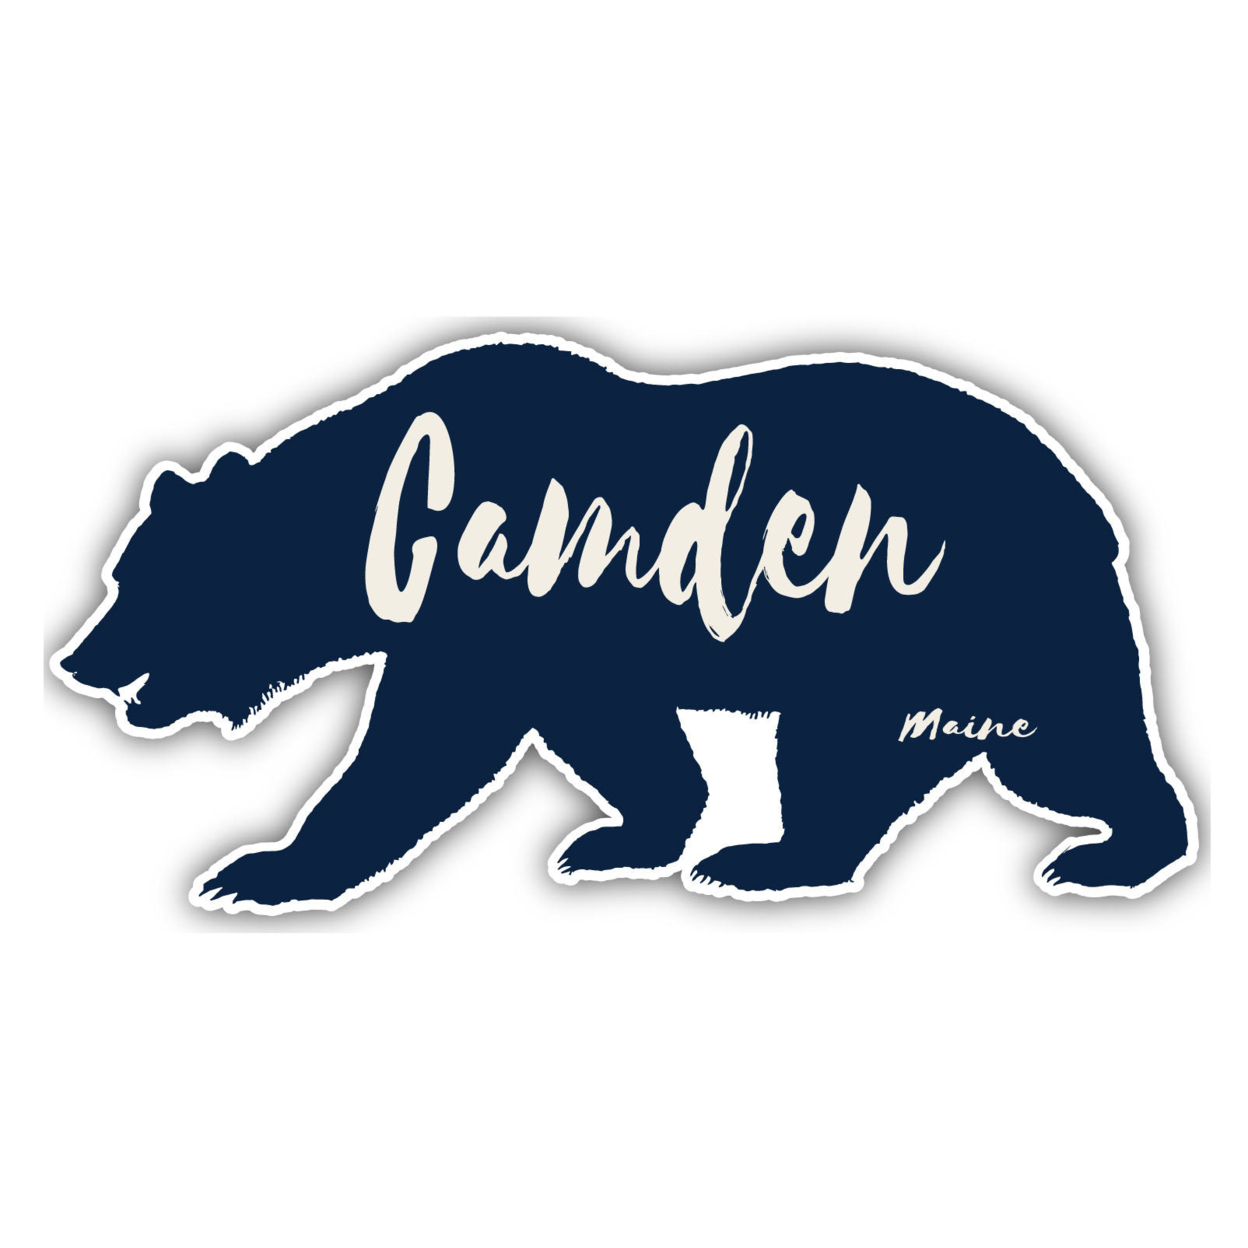 Camden Maine Souvenir Decorative Stickers (Choose Theme And Size) - Single Unit, 6-Inch, Bear